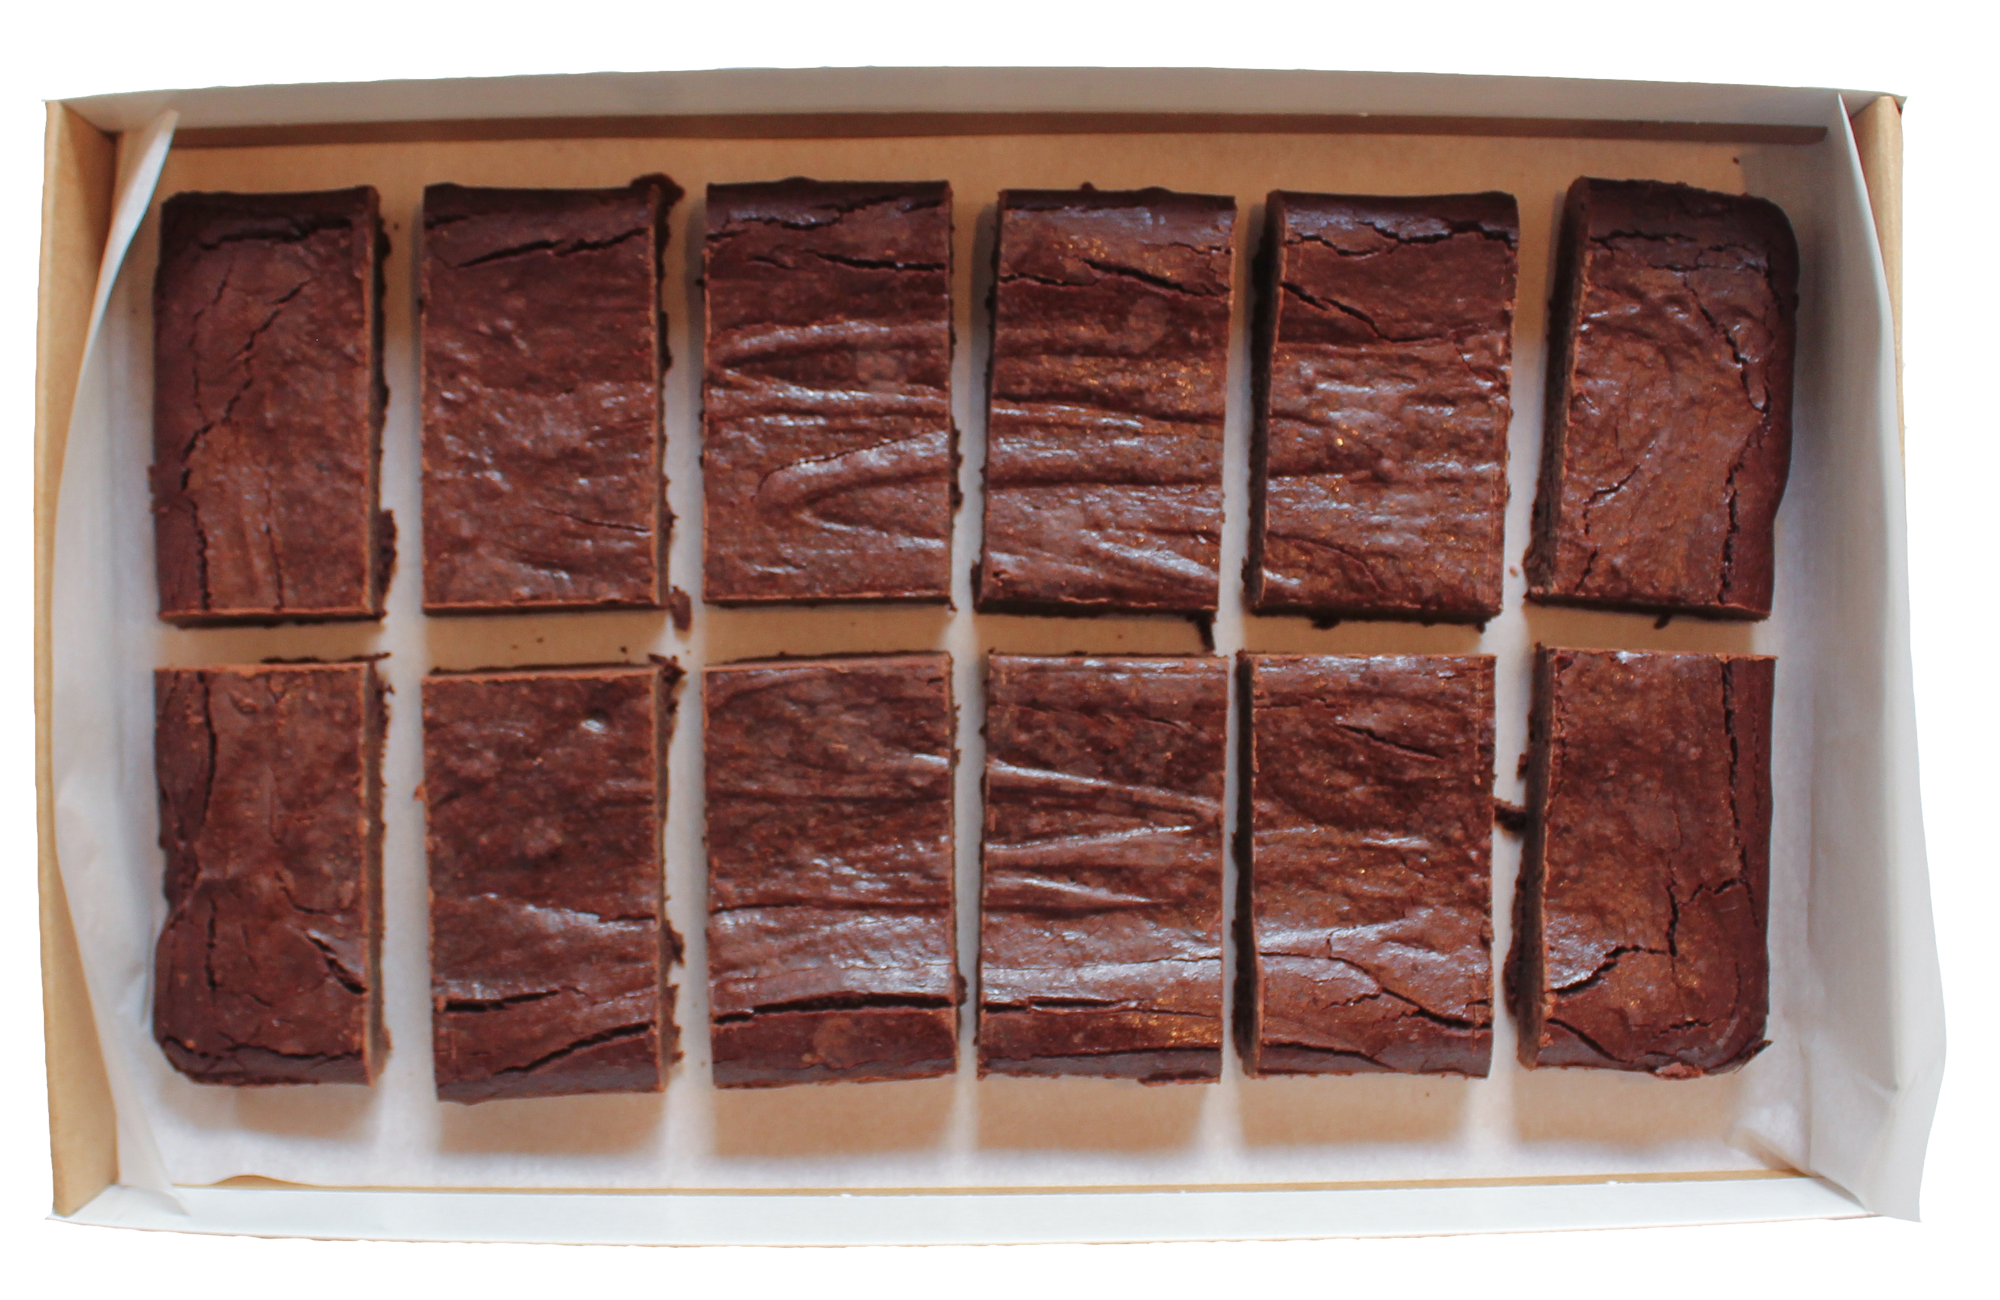 Letterbox Brownie - Chocolate (GF)